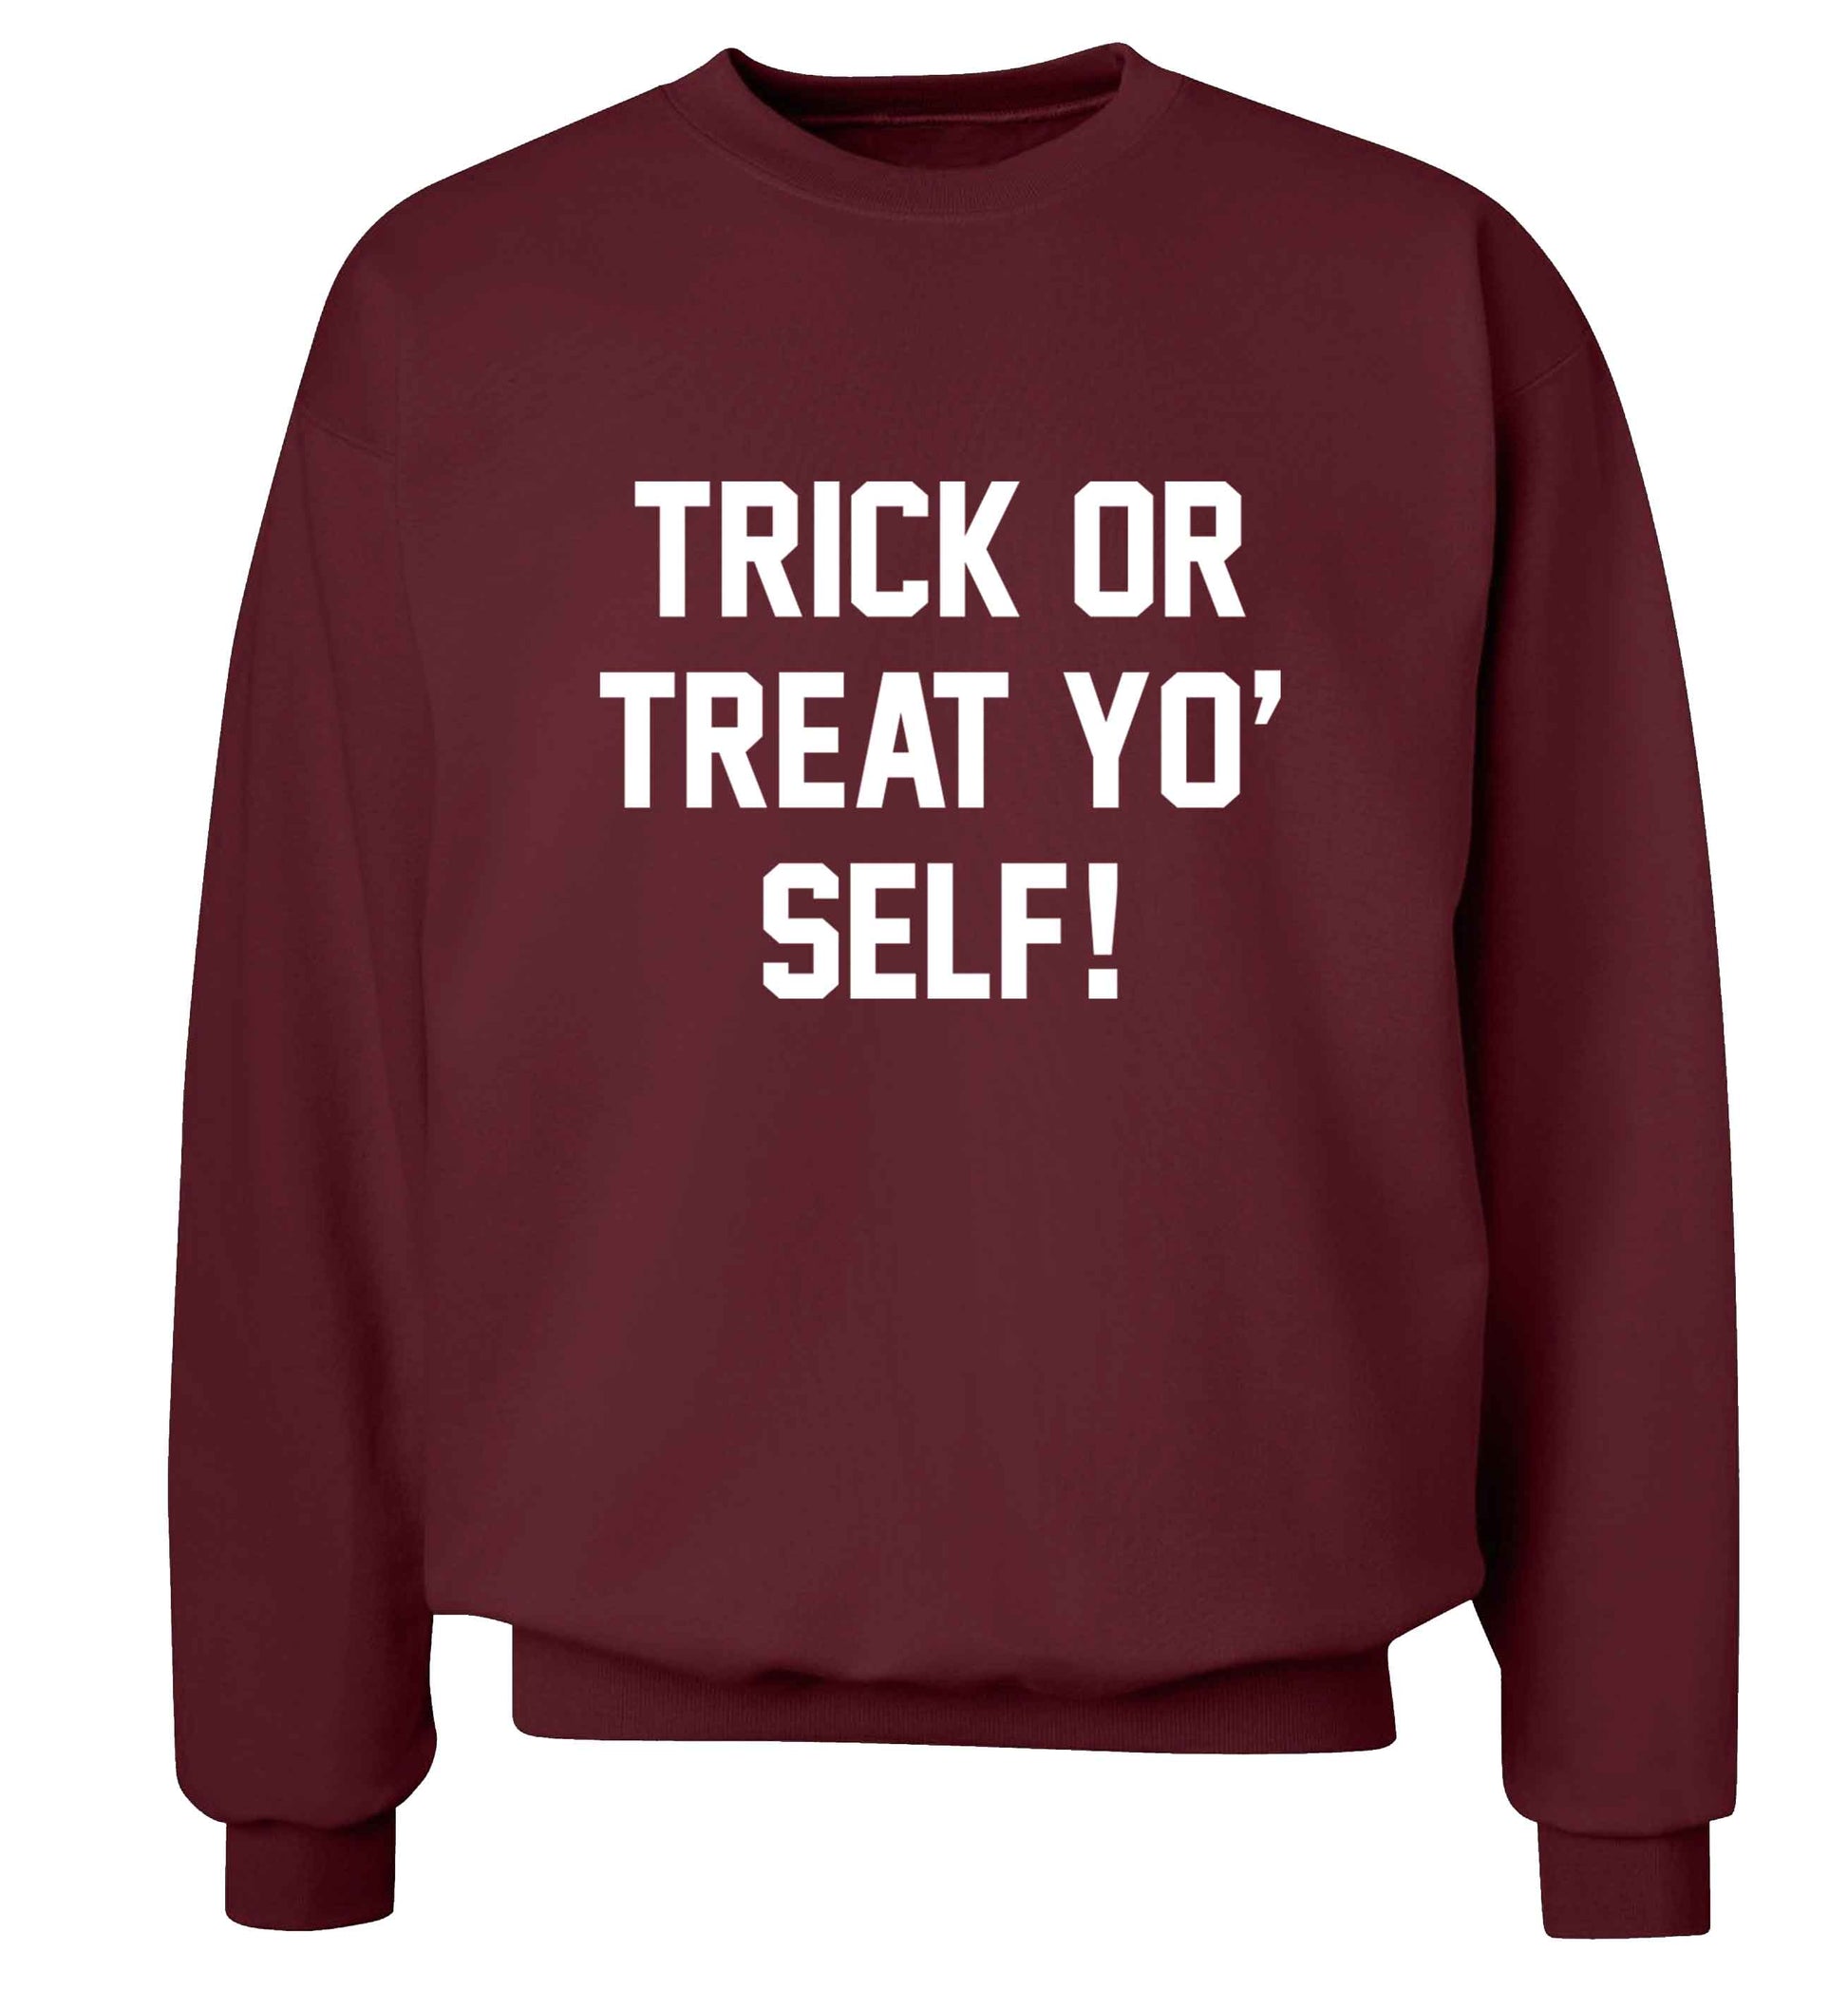 Trick or Treat Yo' Self adult's unisex maroon sweater 2XL